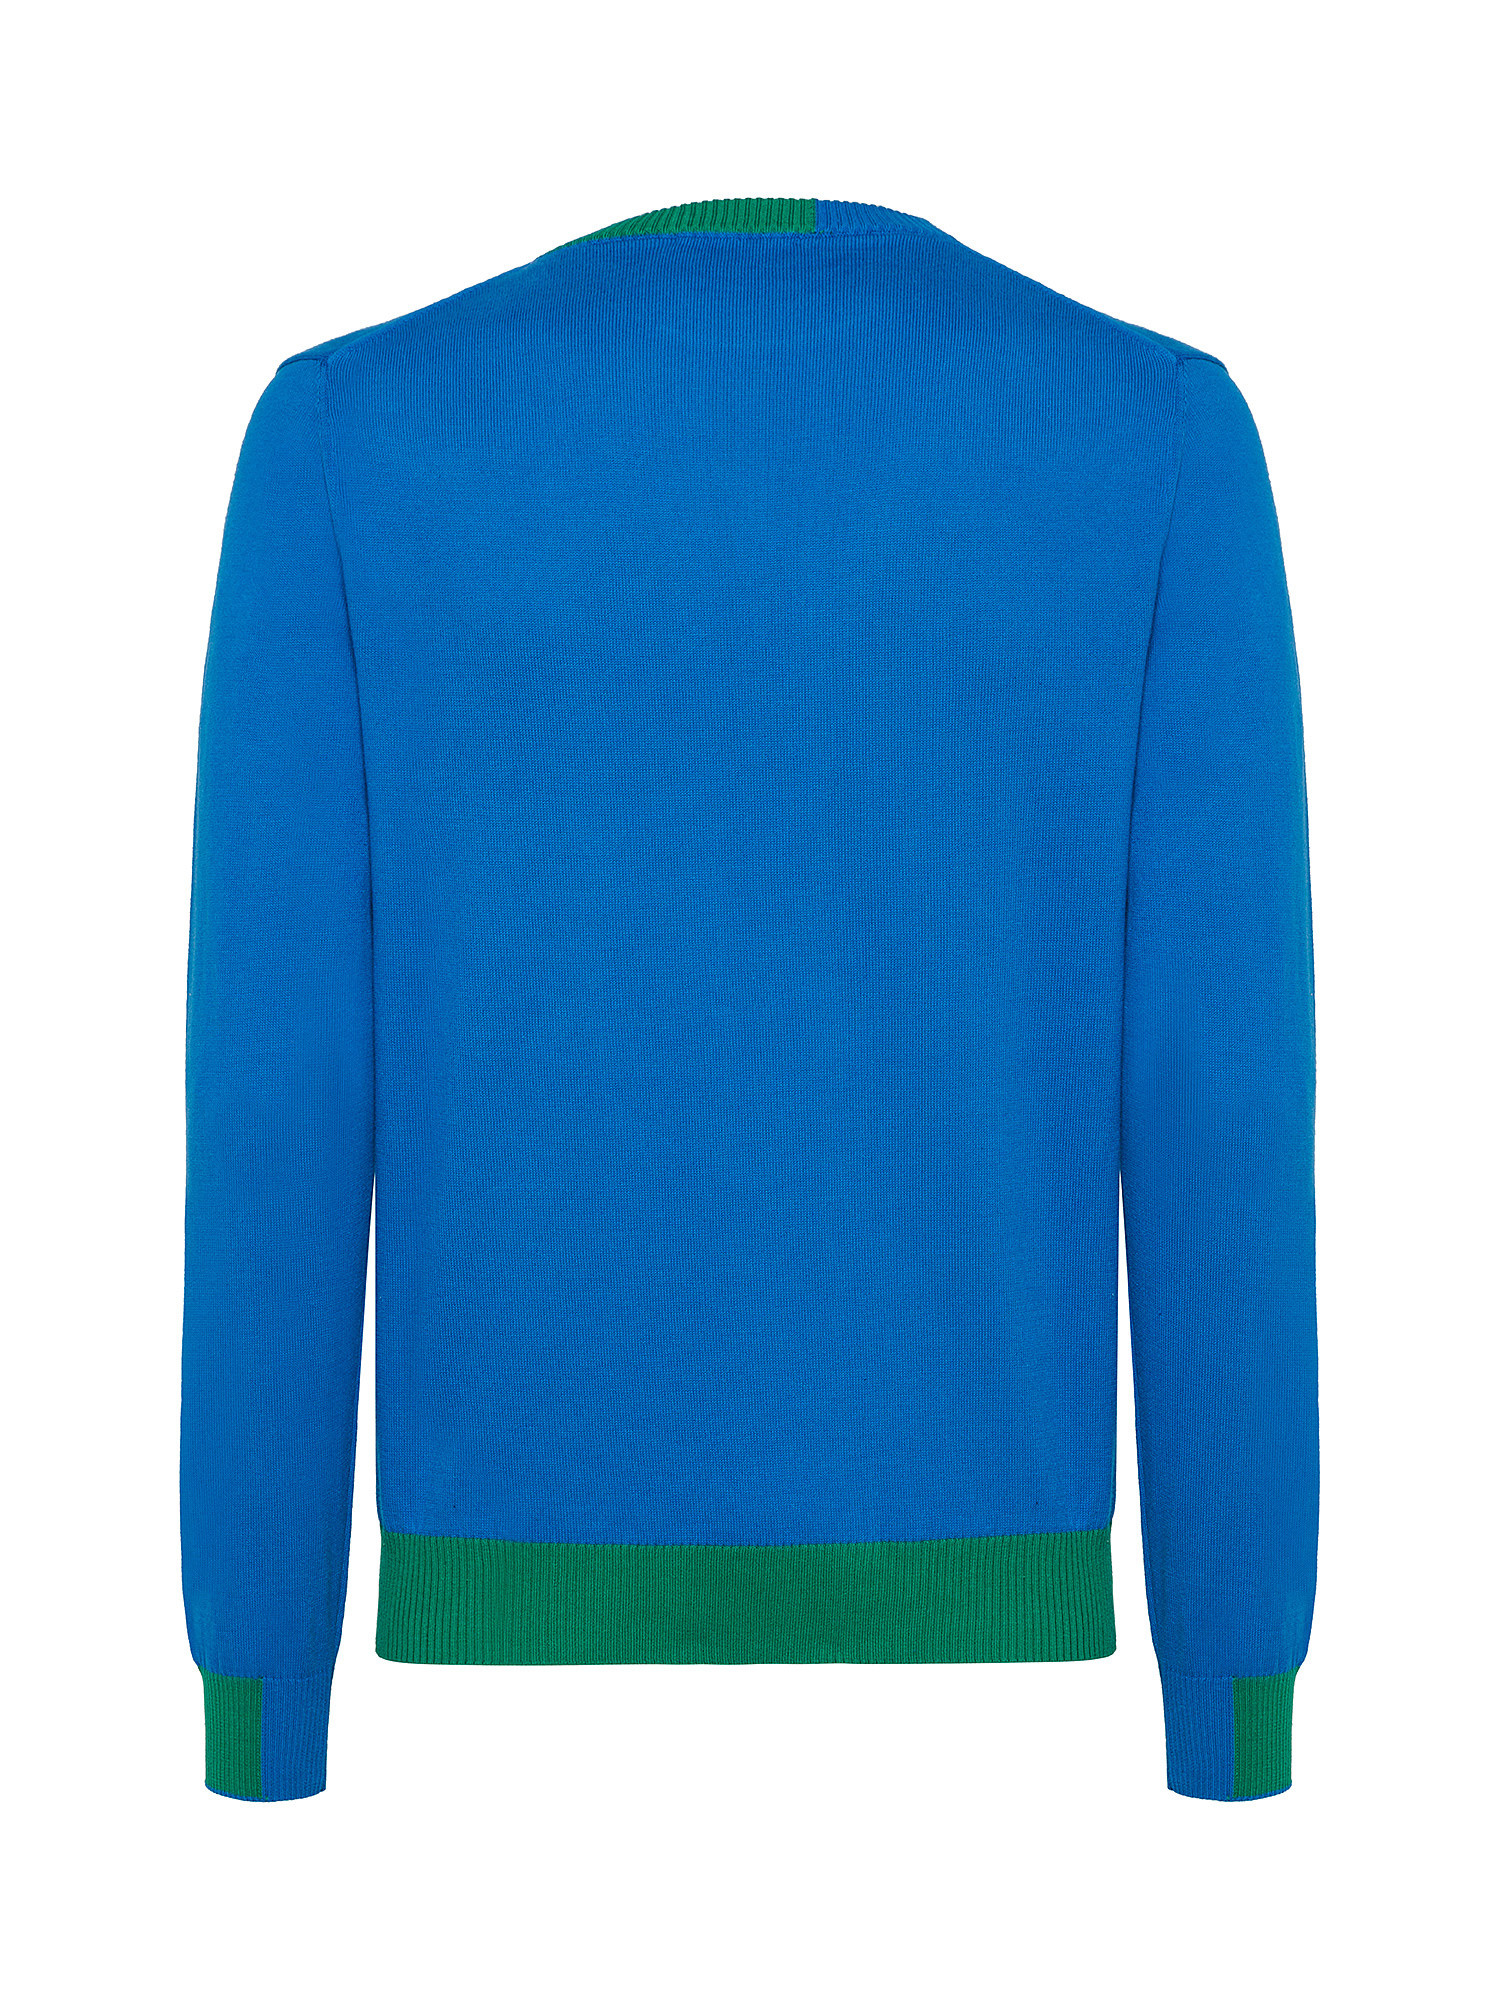 Manuel Ritz - Organic cotton sweater with logo, Royal Blue, large image number 1